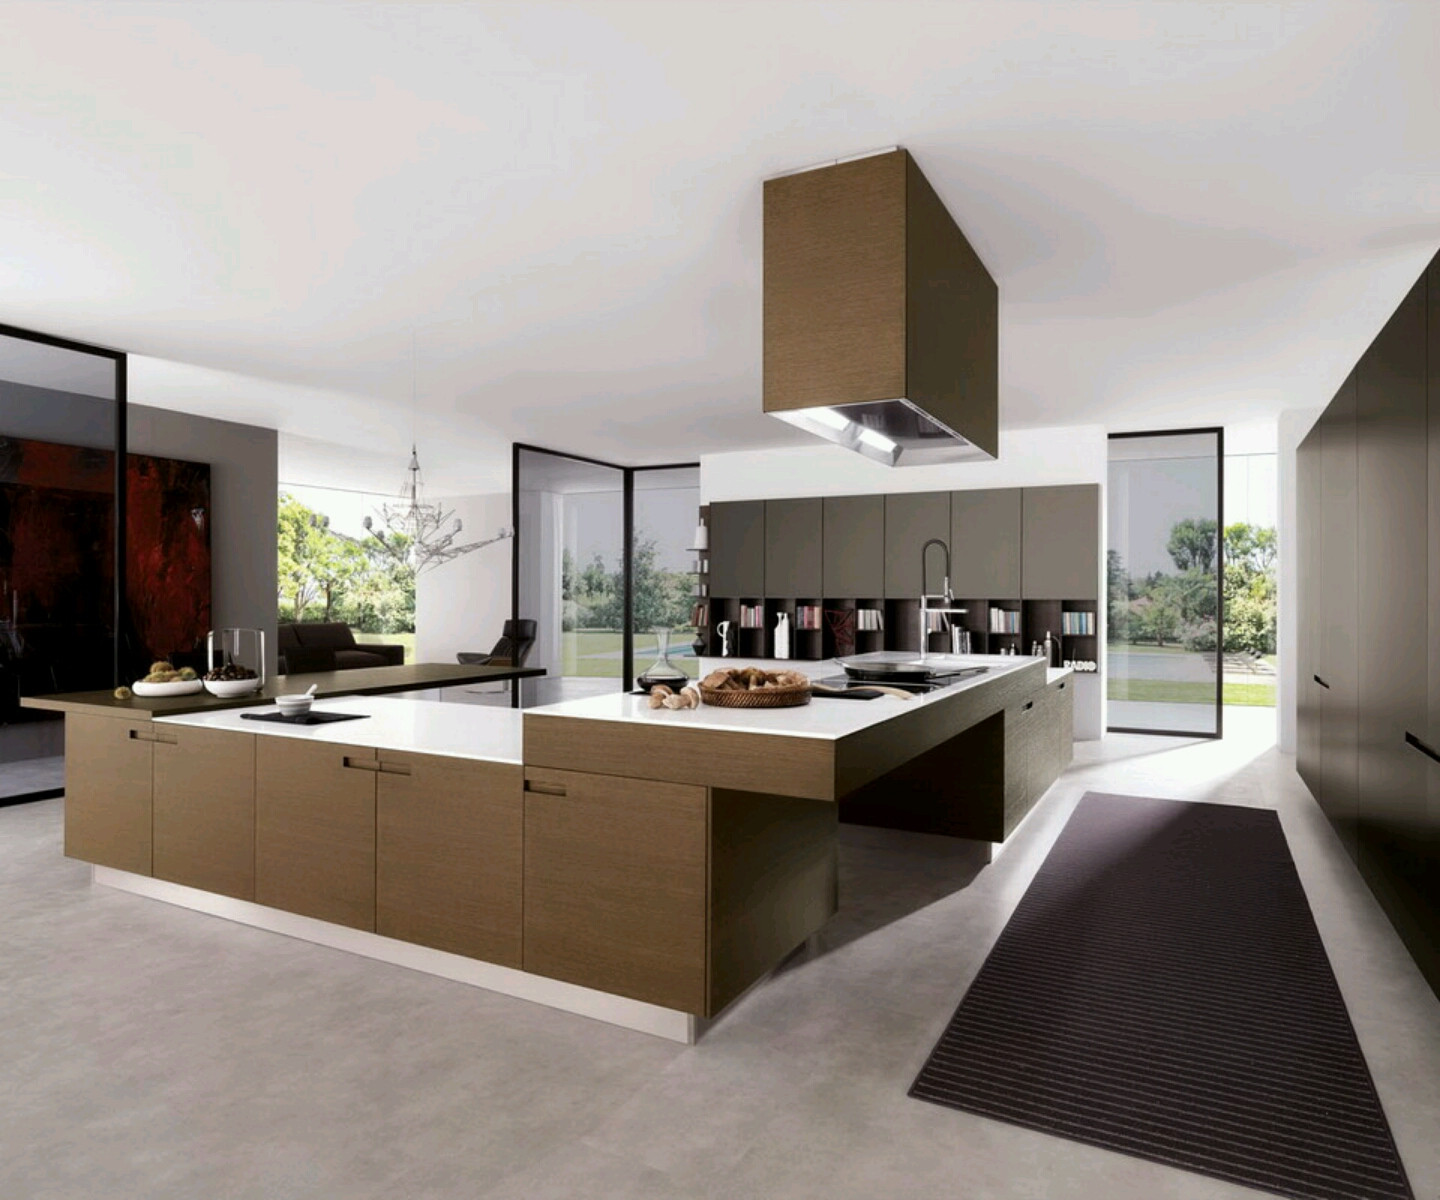 Kitchen Cabinets Design Ideas
 New home designs latest Modern kitchen cabinets designs